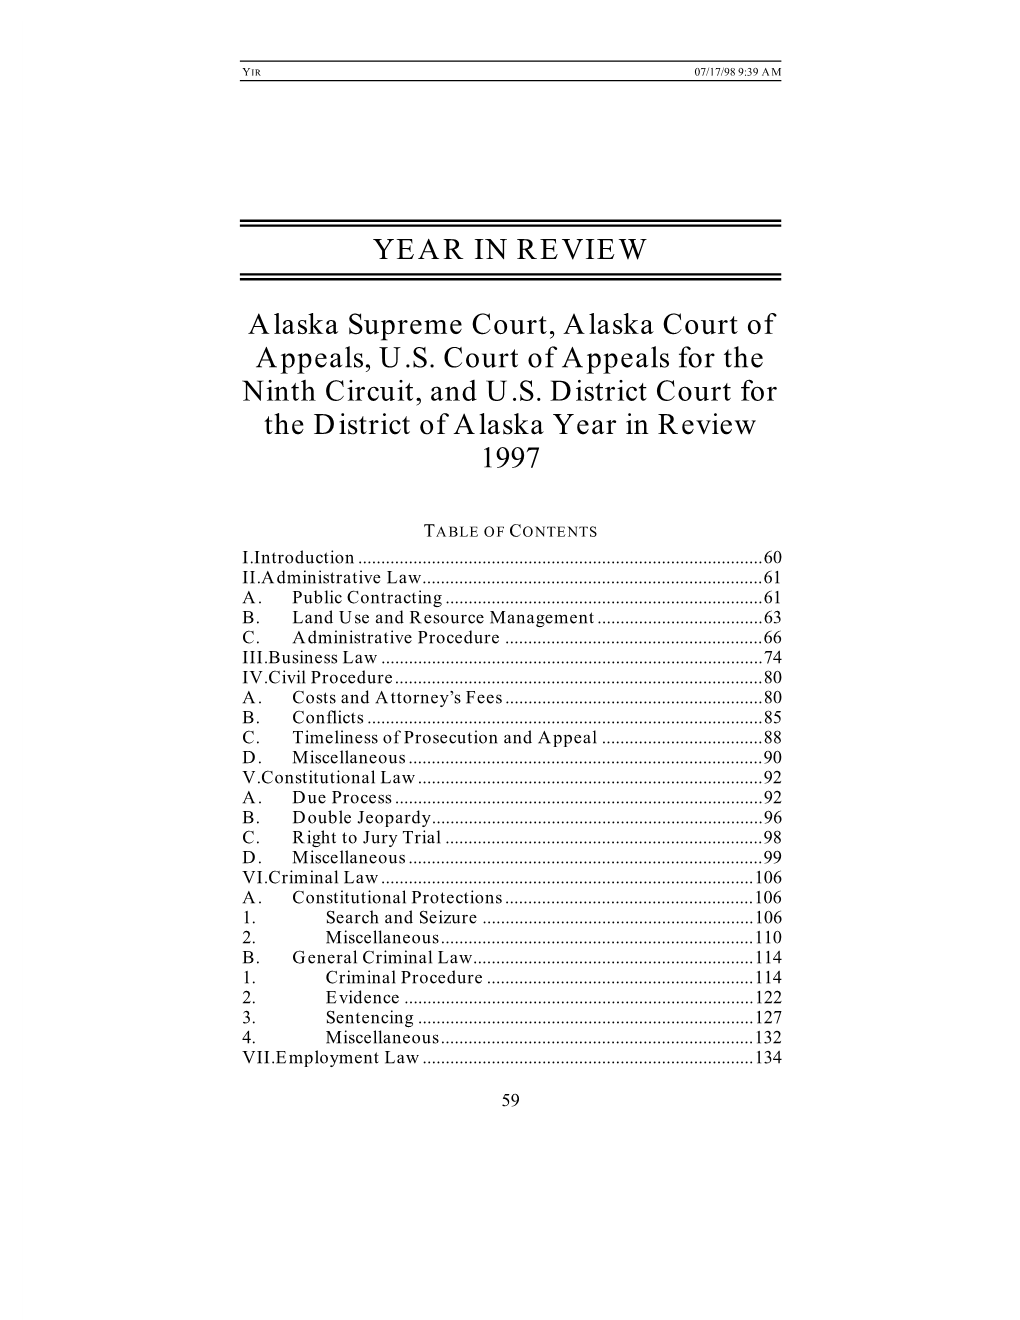 Alaska Supreme Court, Alaska Court of Appeals, U.S. District Court Of